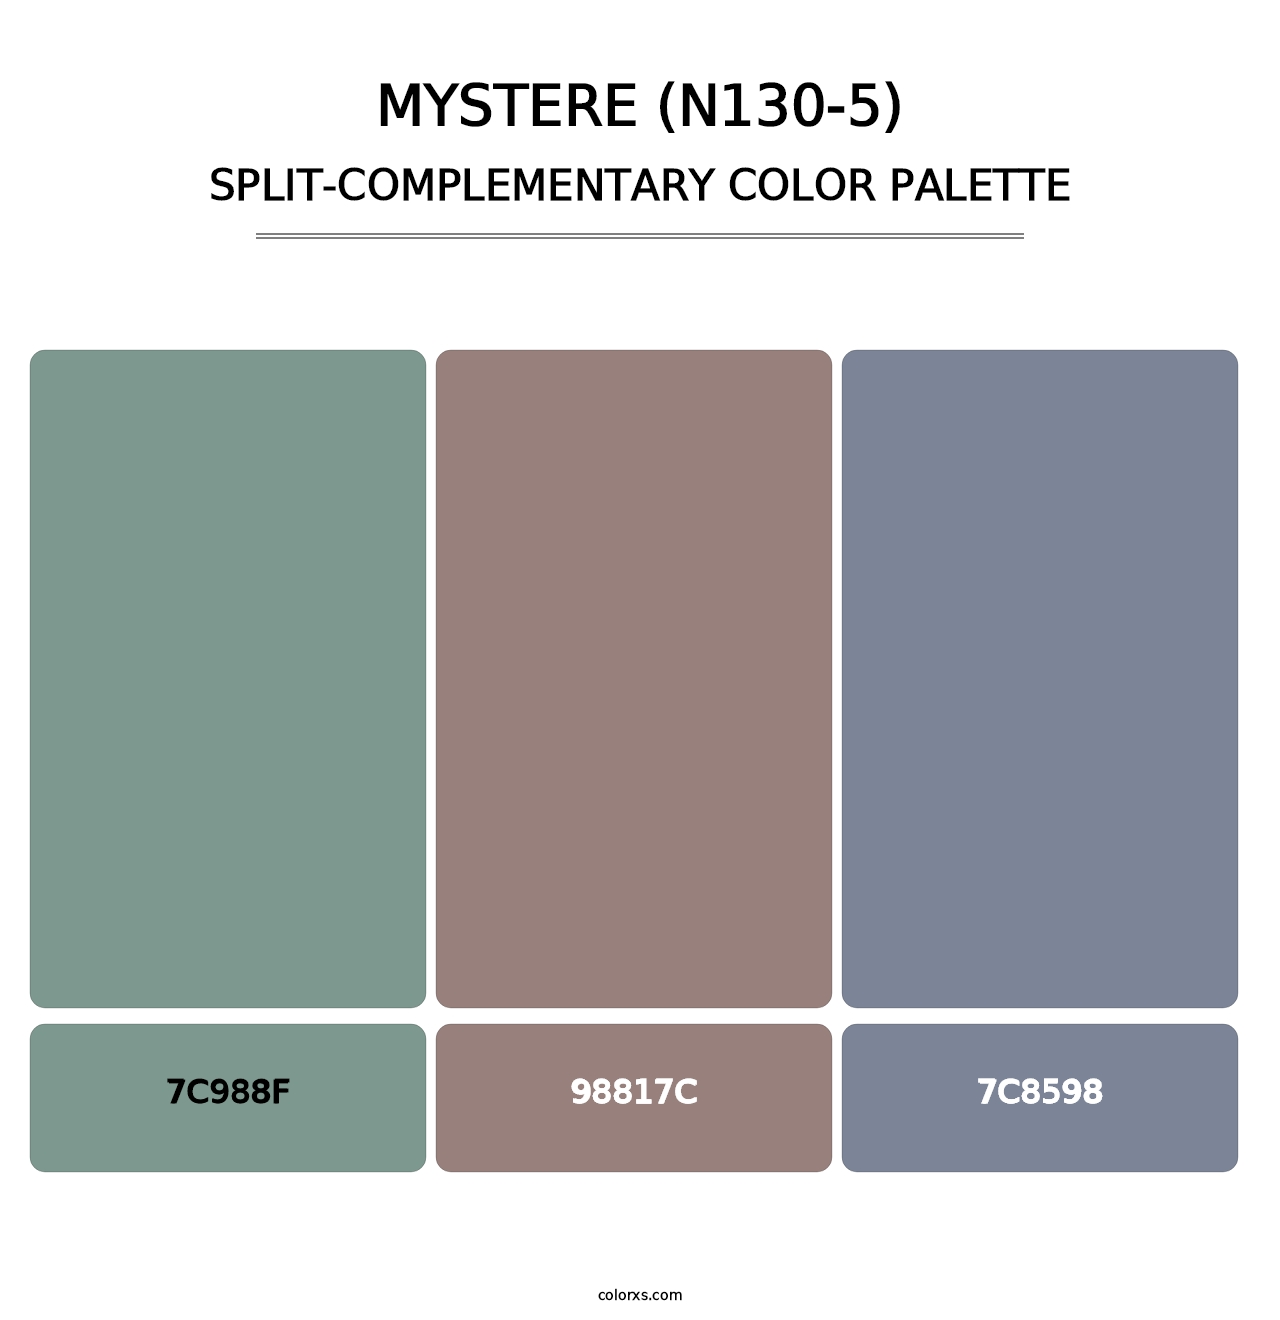 Mystere (N130-5) - Split-Complementary Color Palette